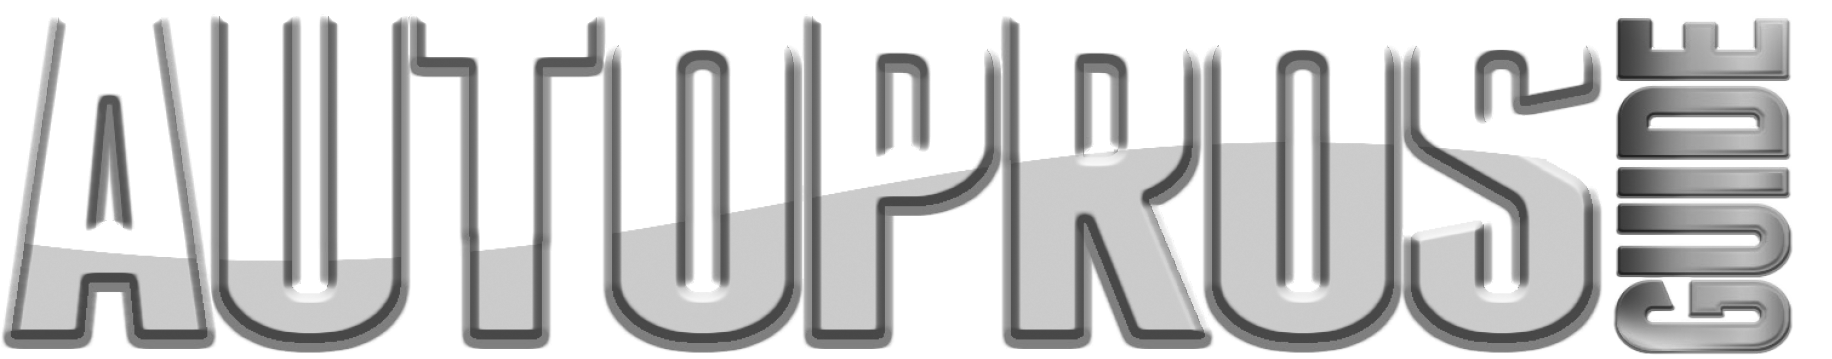 HomePros logo